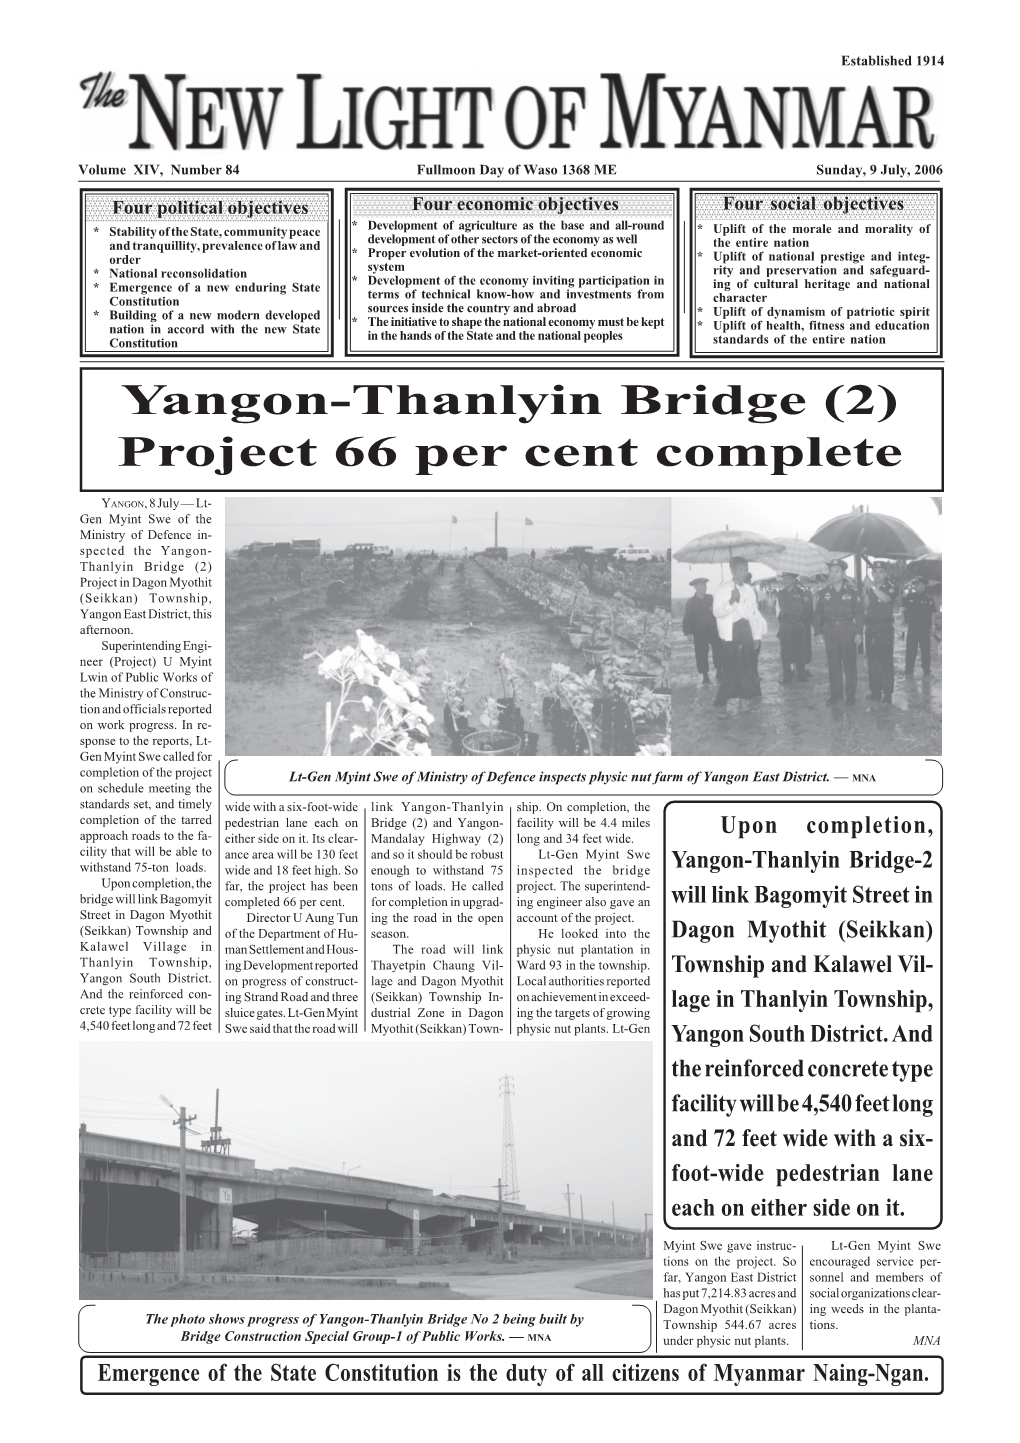 Yangon-Thanlyin Bridge (2) Project 66 Per Cent Complete